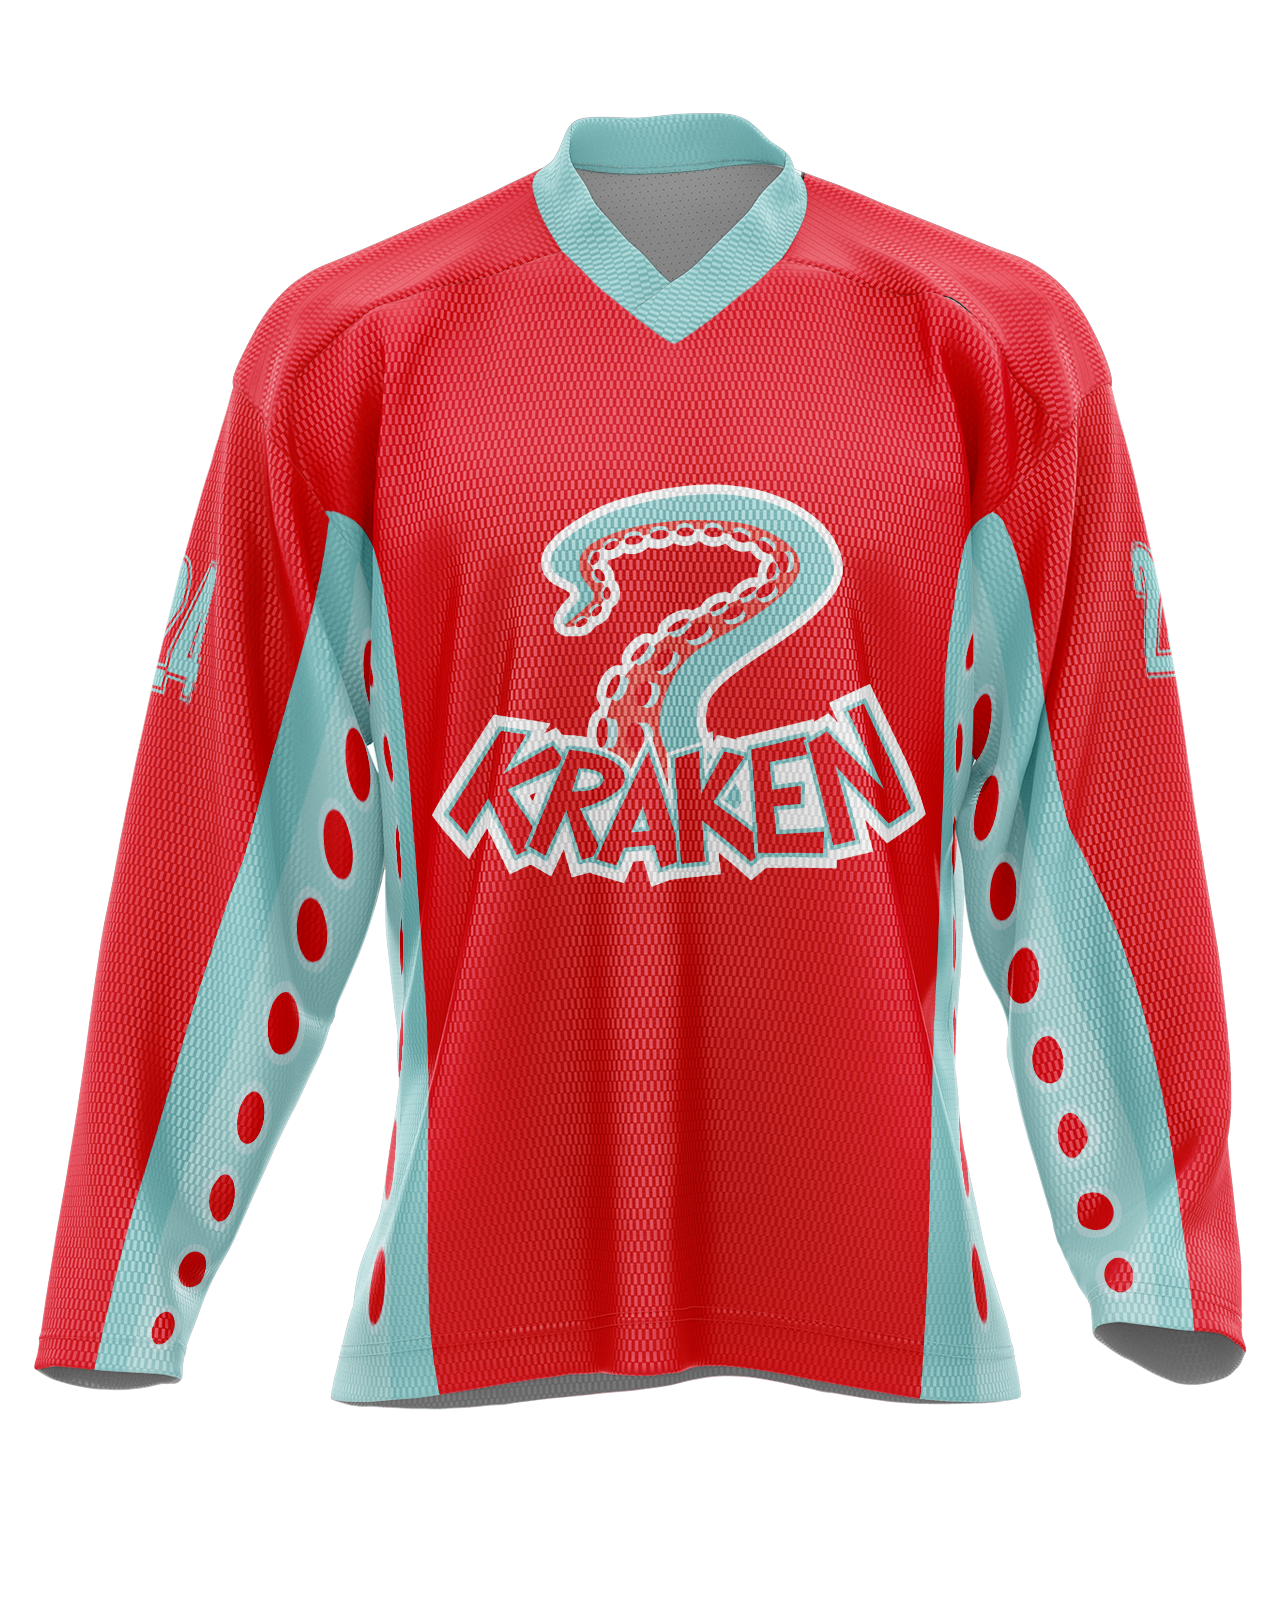 Kraken Hockey Reversible Jersey